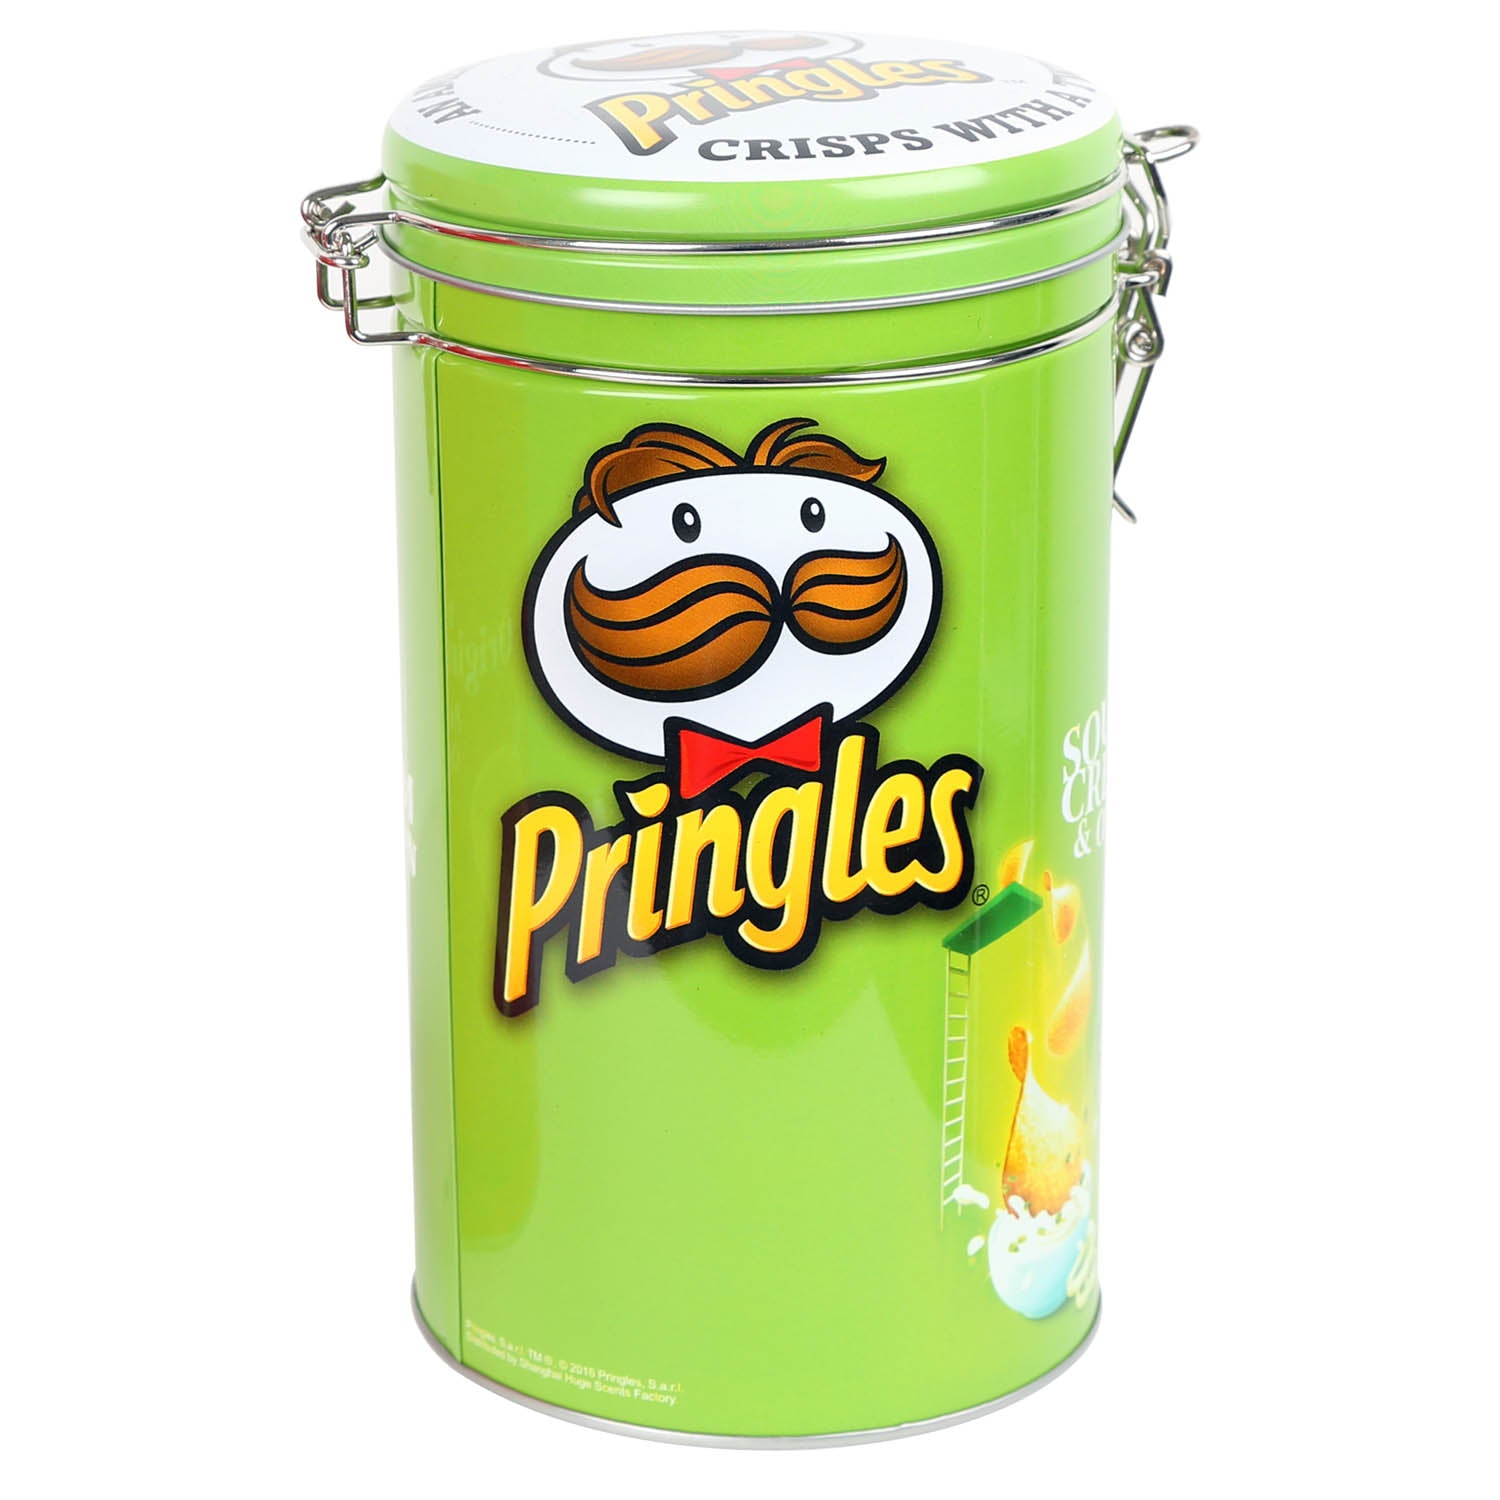 Pringles Green Cylinder Sealable Storage Tin